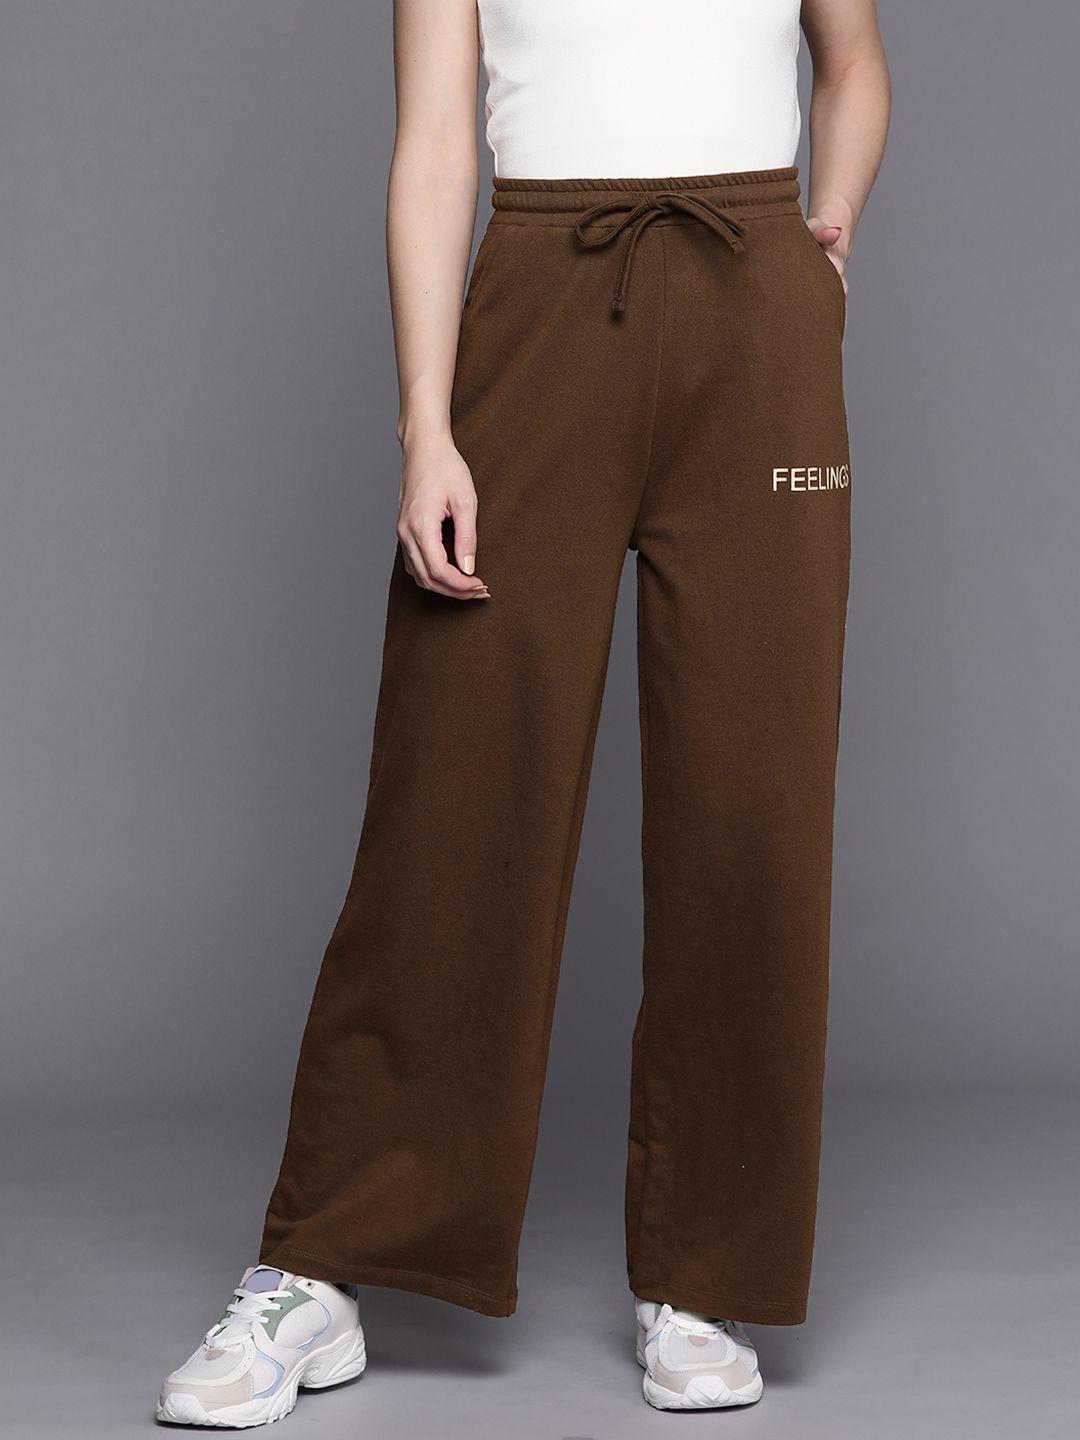 sassafras-women-brown-track-pants